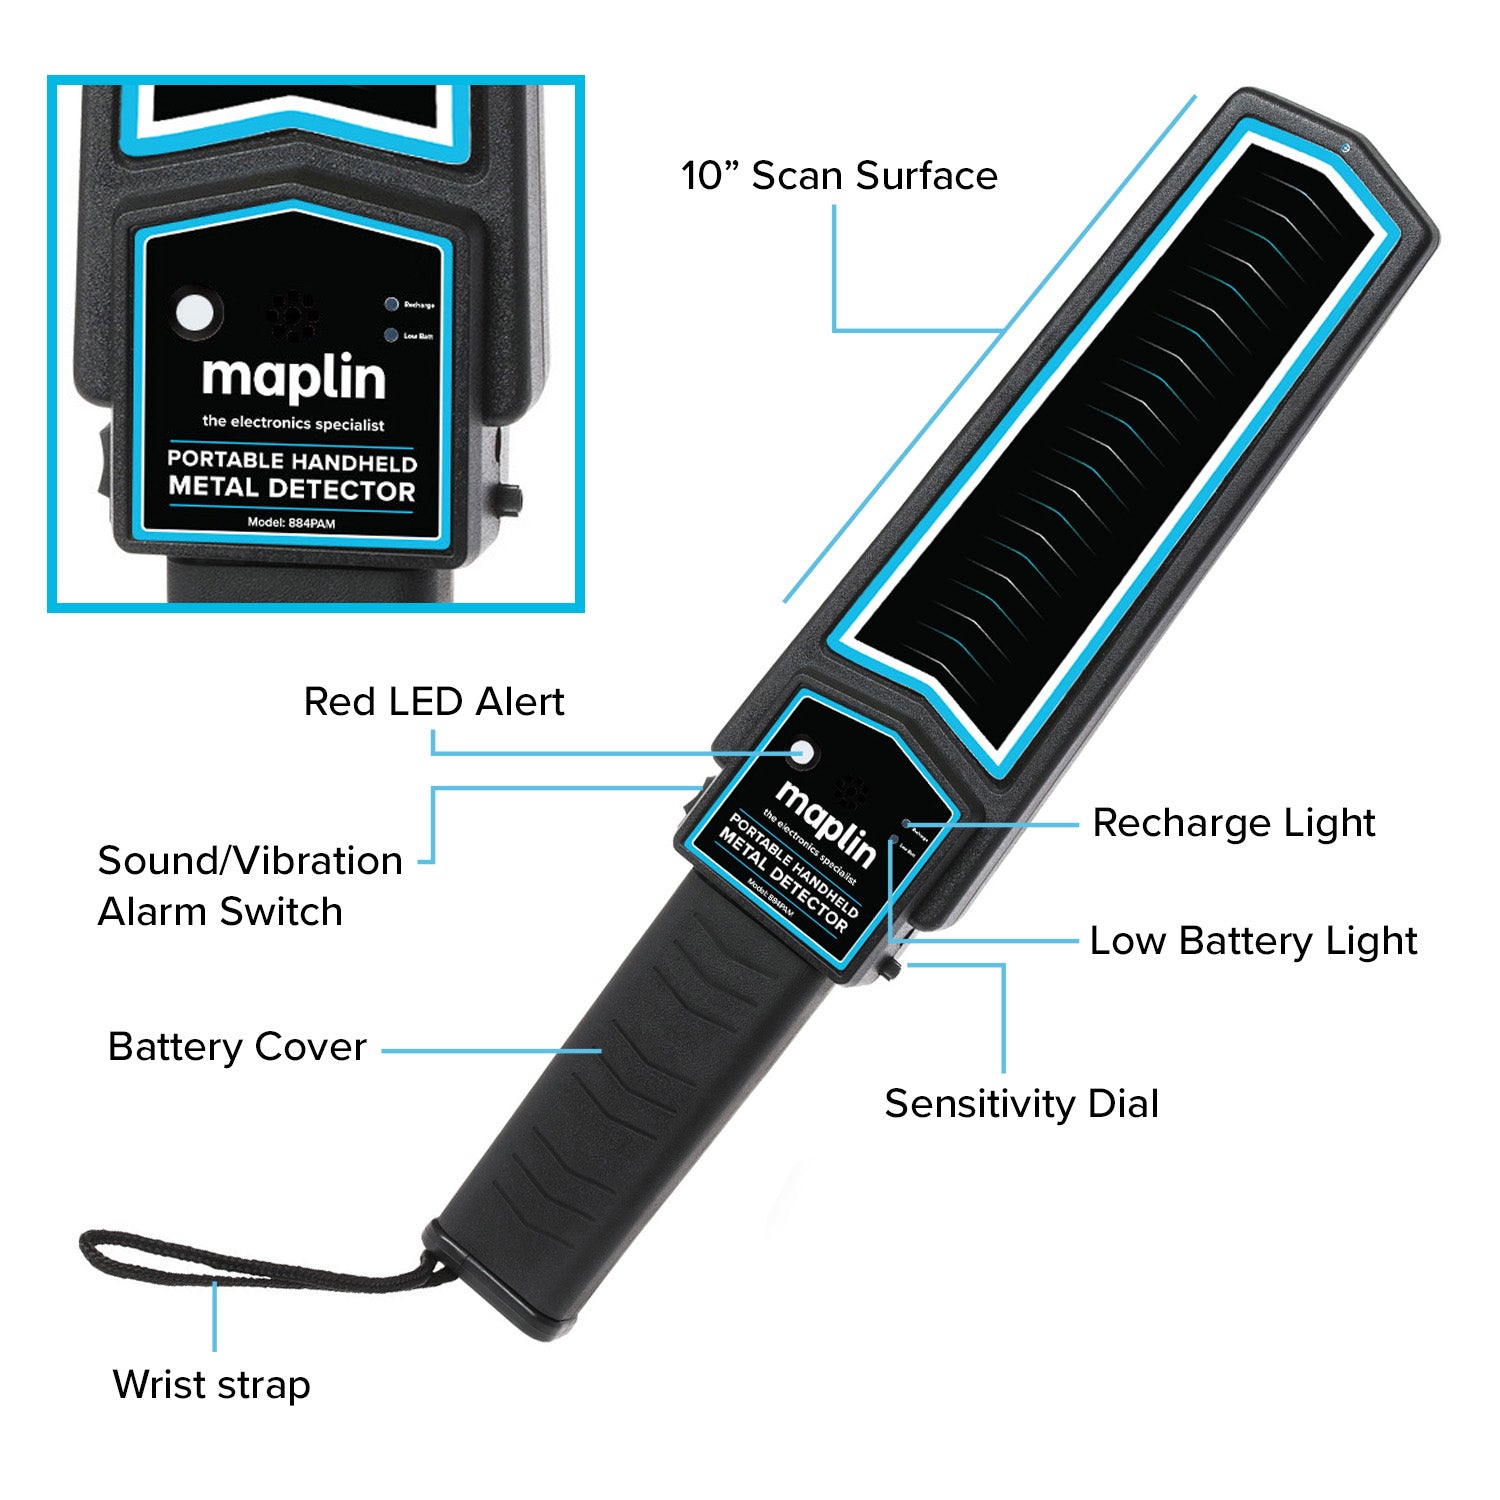 Maplin Handheld 10" Metal Detector Body Scanner with Beep/Vibration Alerts & LED Light - maplin.co.uk